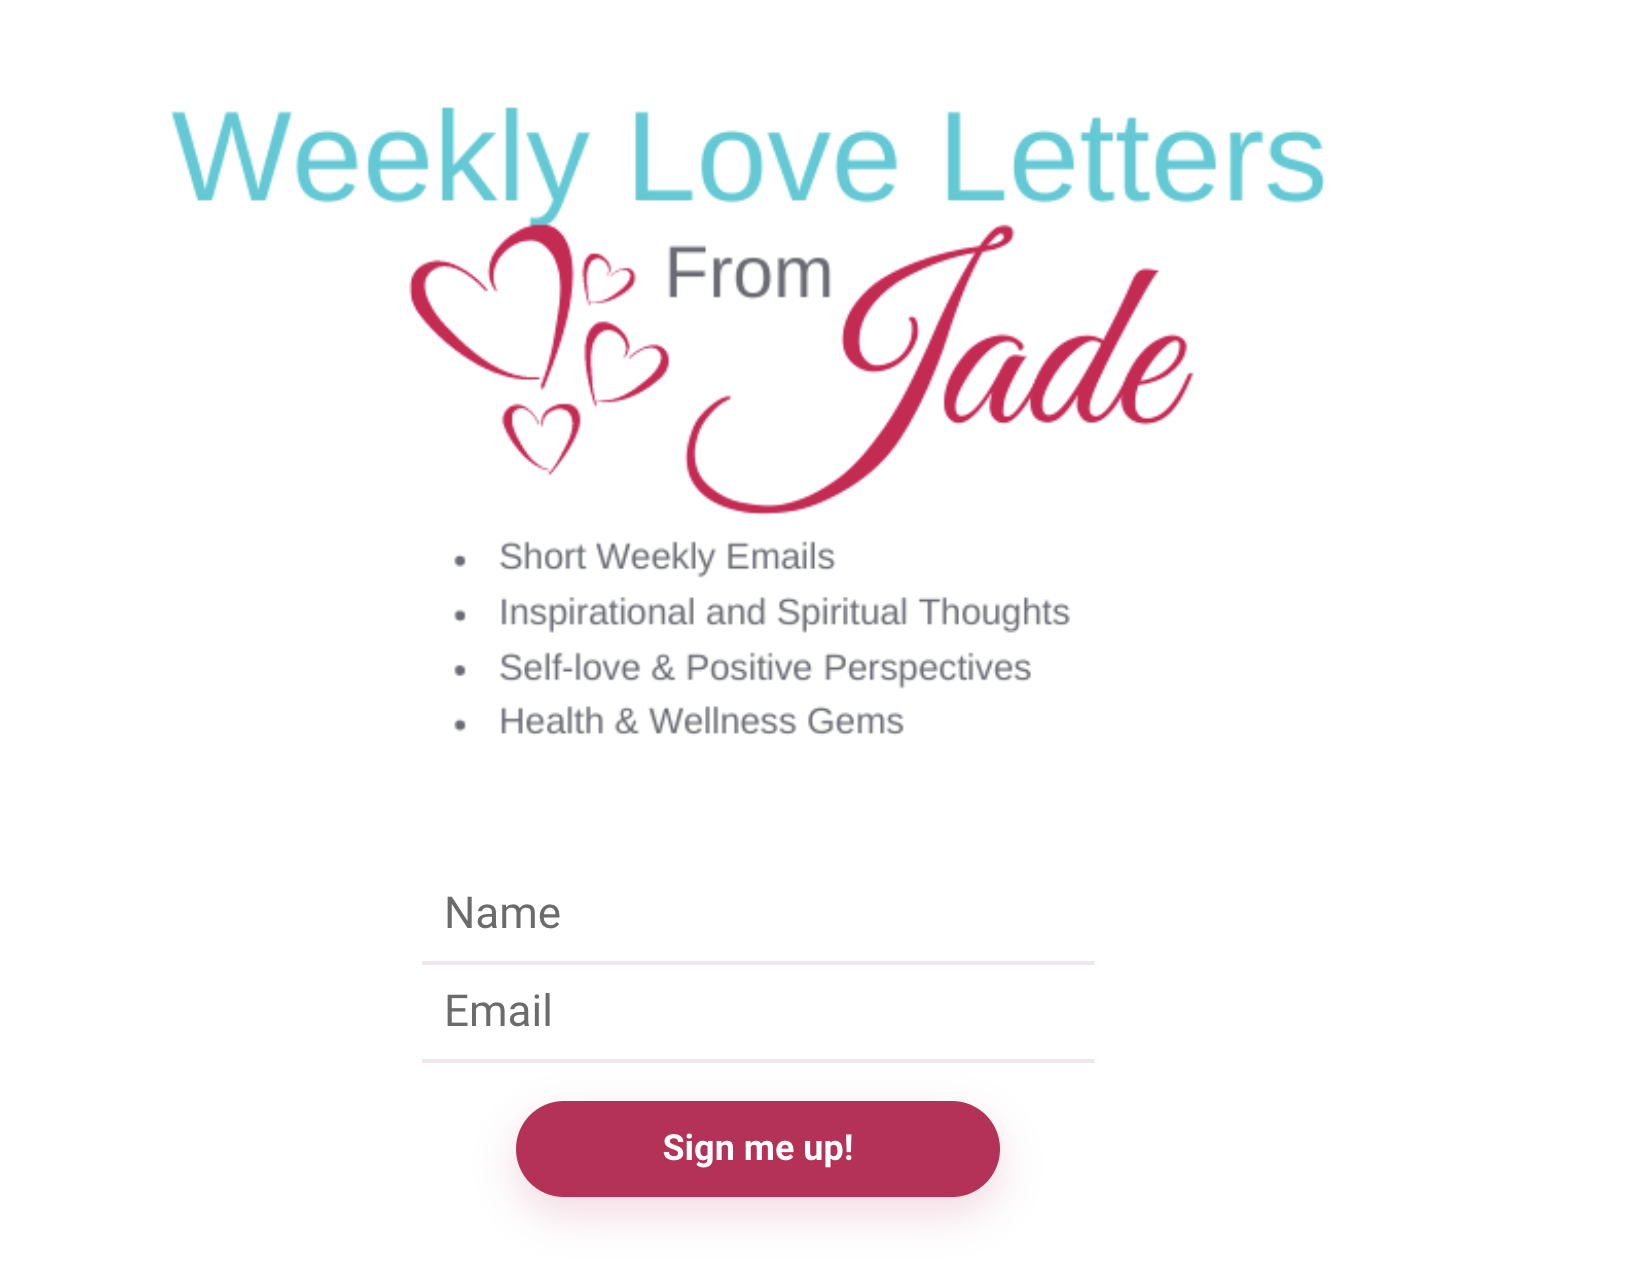 https://app.getresponse.com/site2/aa_jade_love_letters?u=Syfzc&webforms_id=Sh1kd